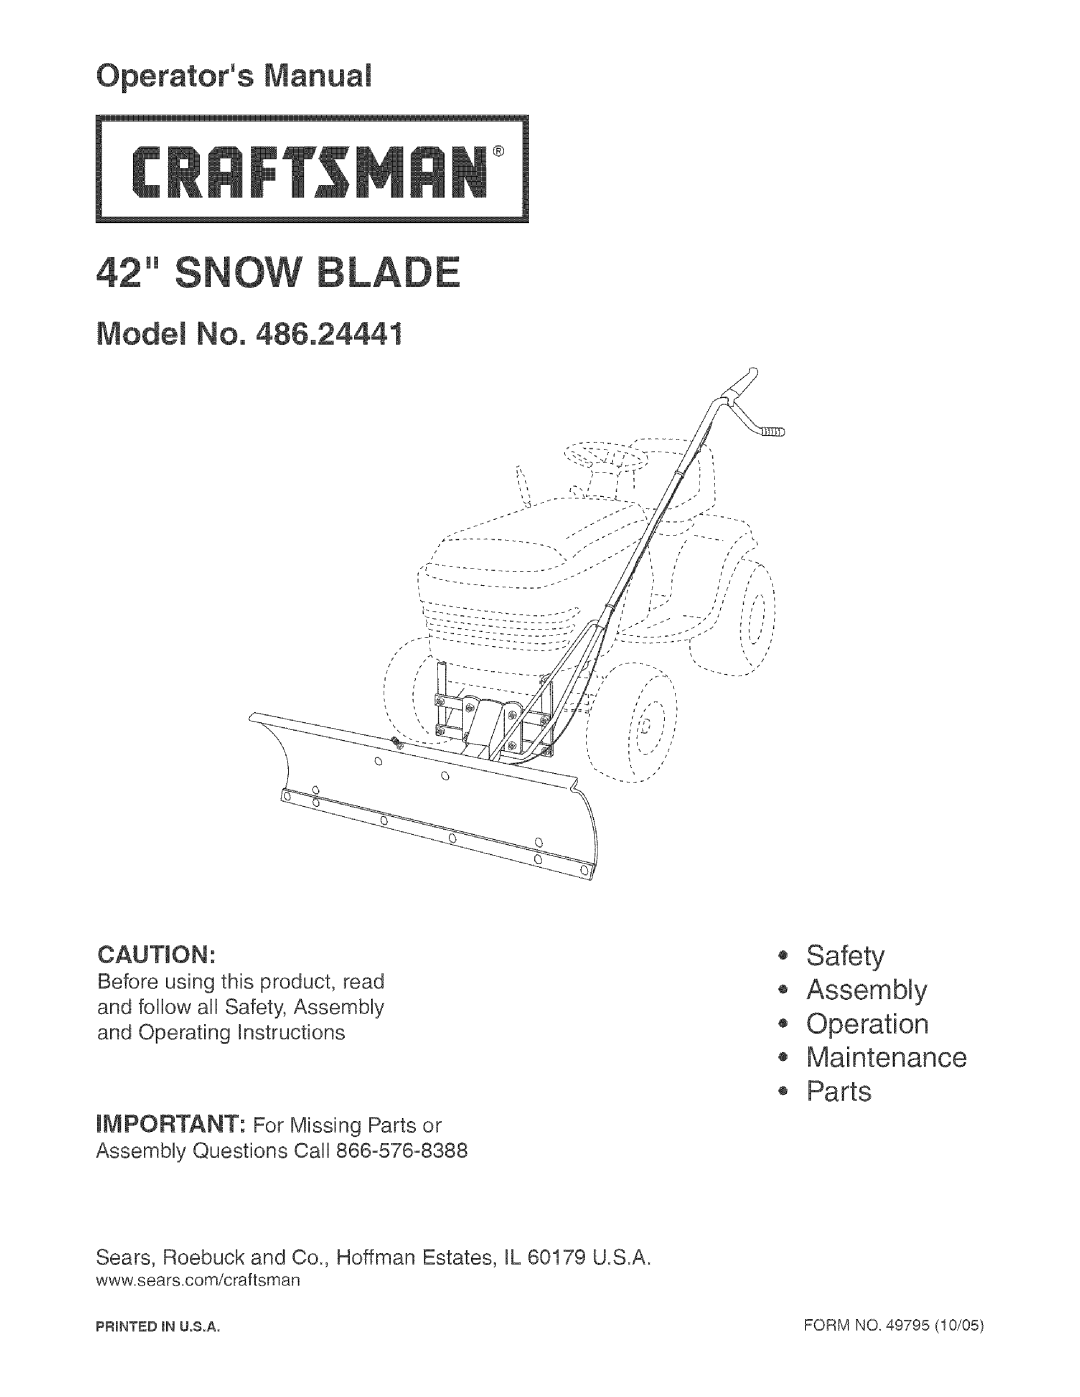 Craftsman 486.24441 operating instructions Safety AssembLy Operation Maintenance Parts, Operators IVianuai 